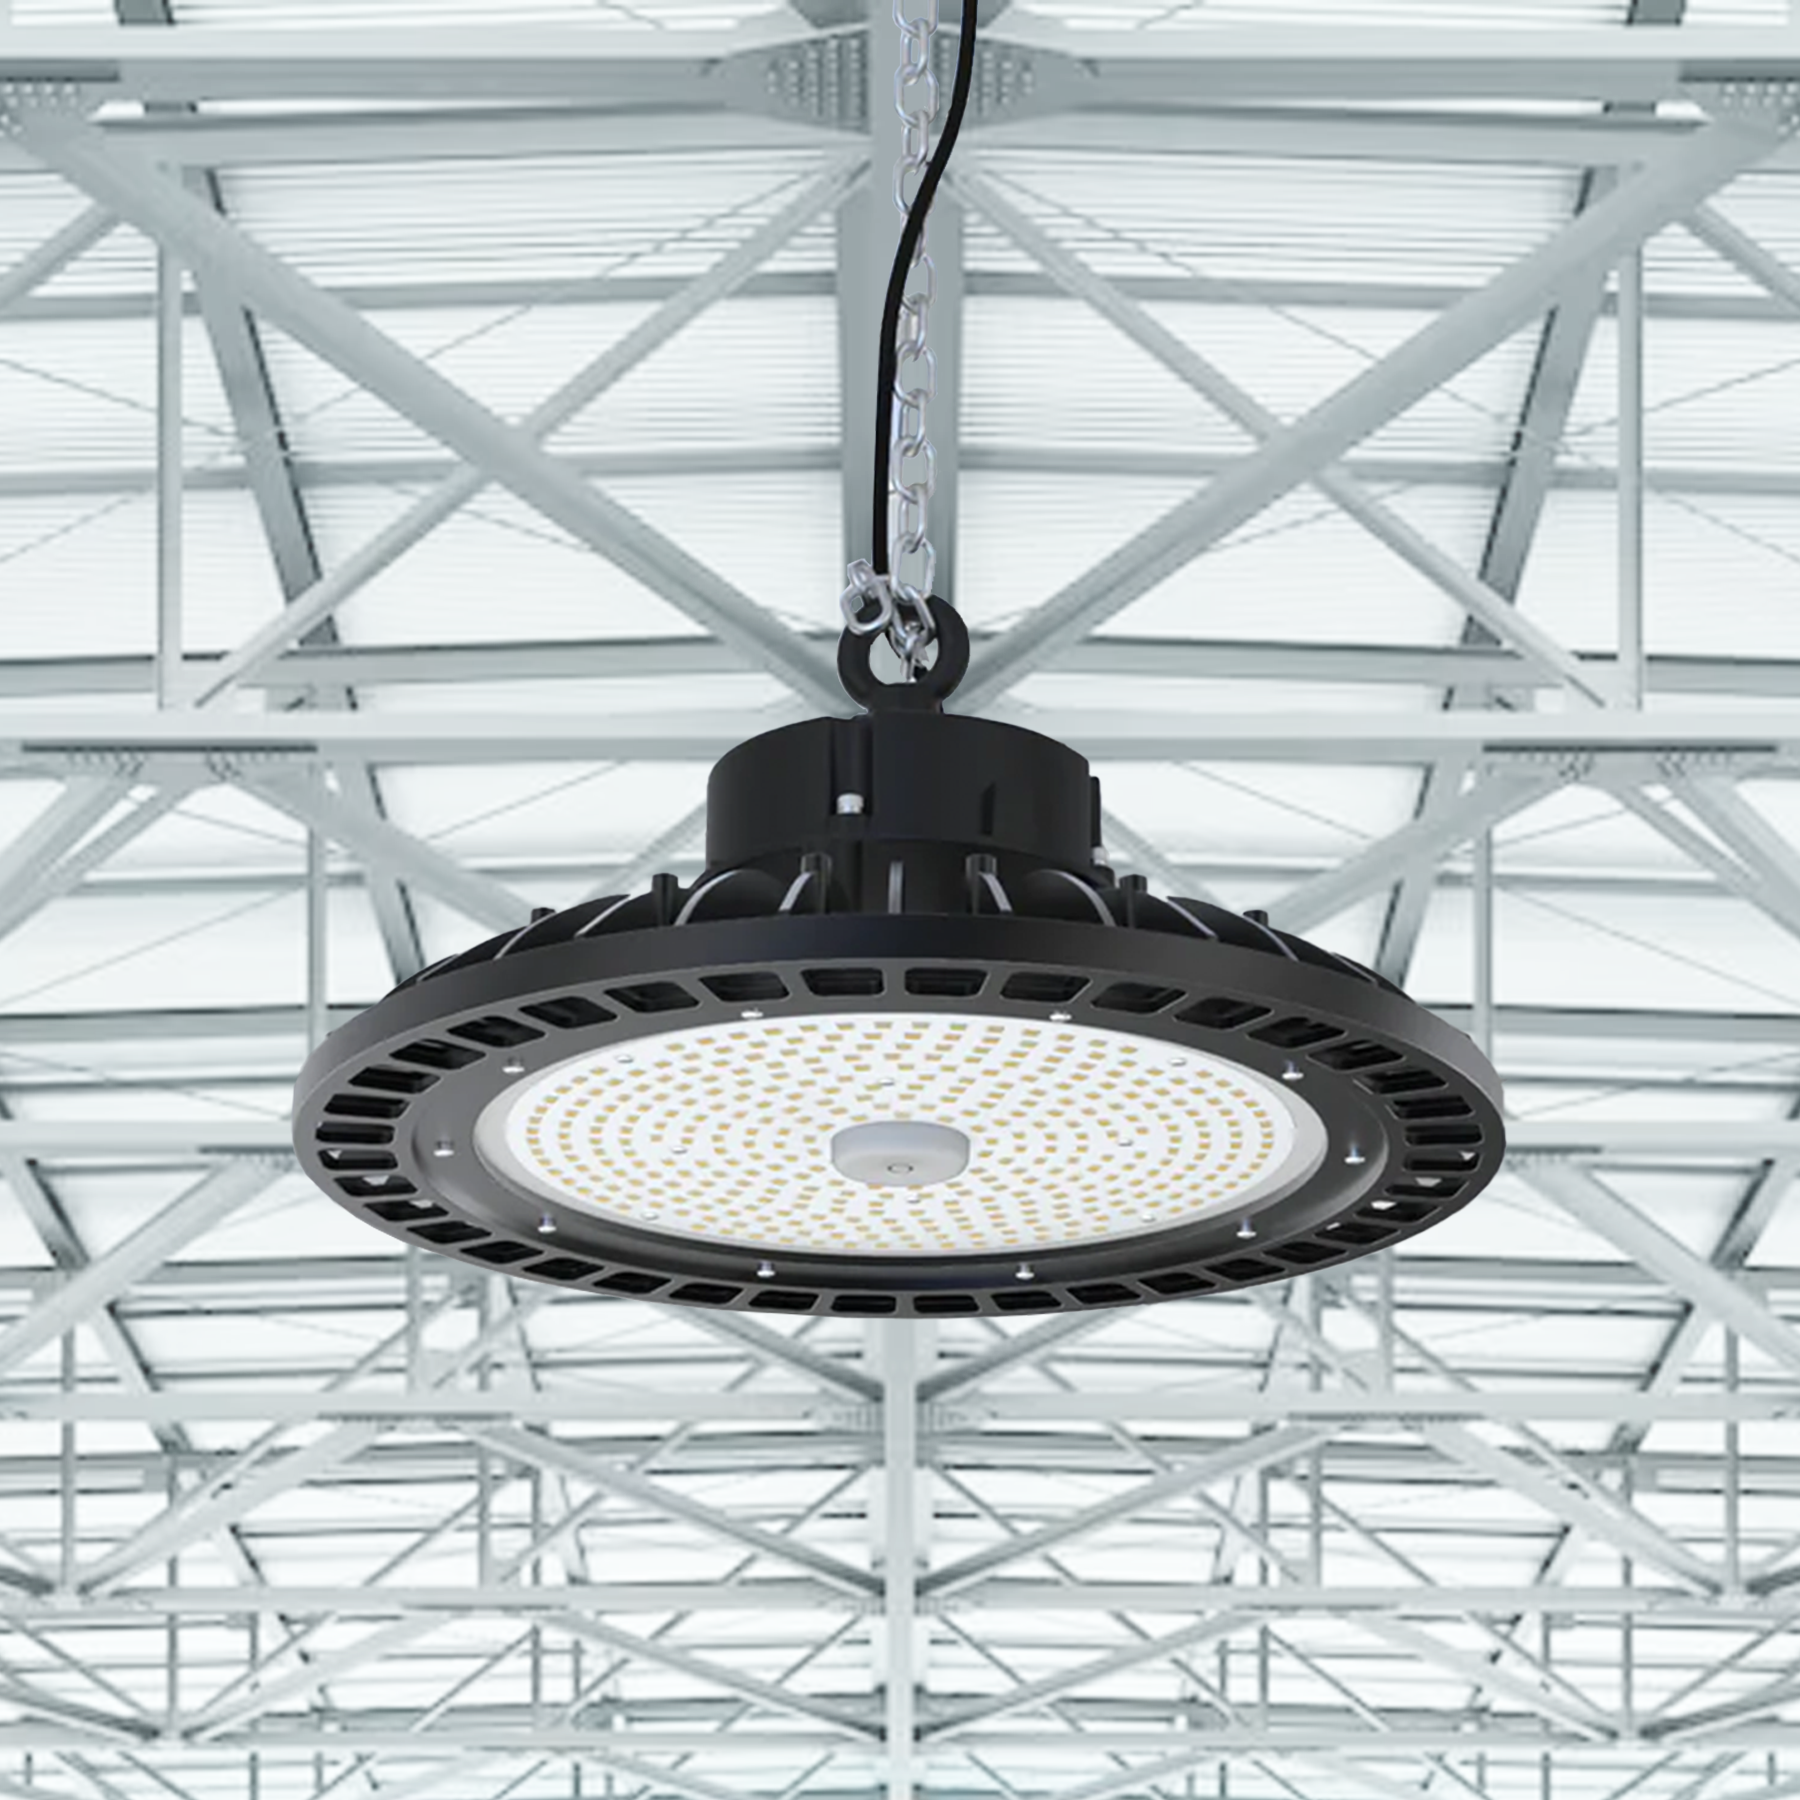 100W UFO High Bay LED Shop Lights 4000K - Dimmable (1-10V), AC120-277V, UL DLC Listed - Ideal for Commercial Warehouses, Garages, Workshops, and Factories